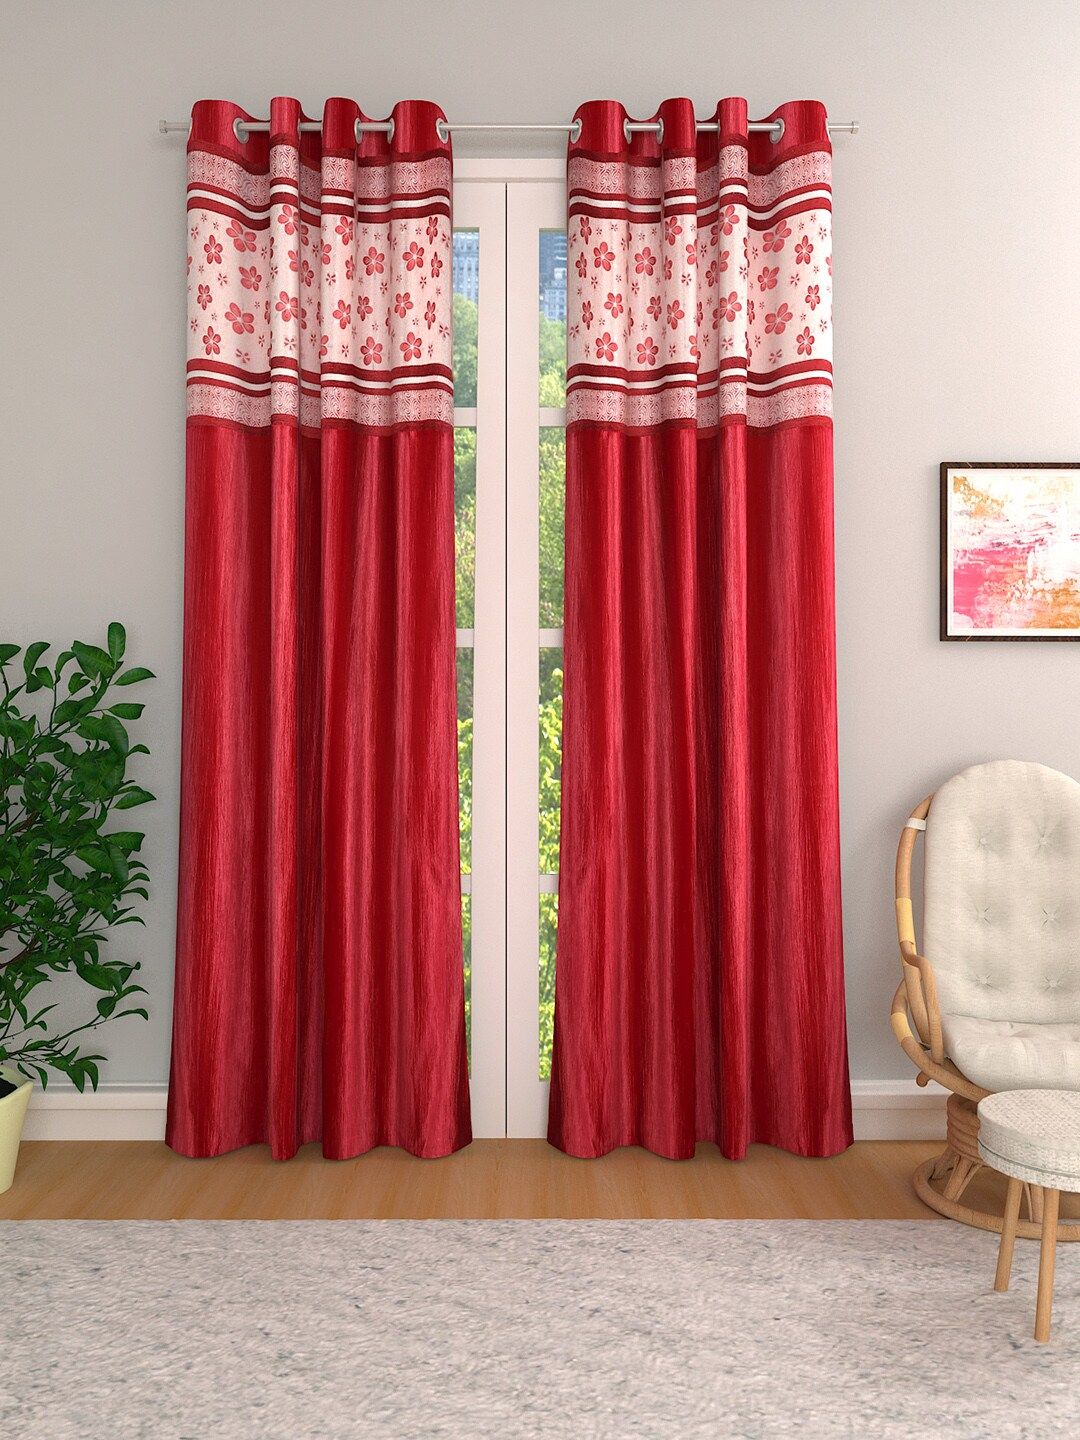 ROMEE Set of 2 Red & White Room Darkening Curtains Price in India